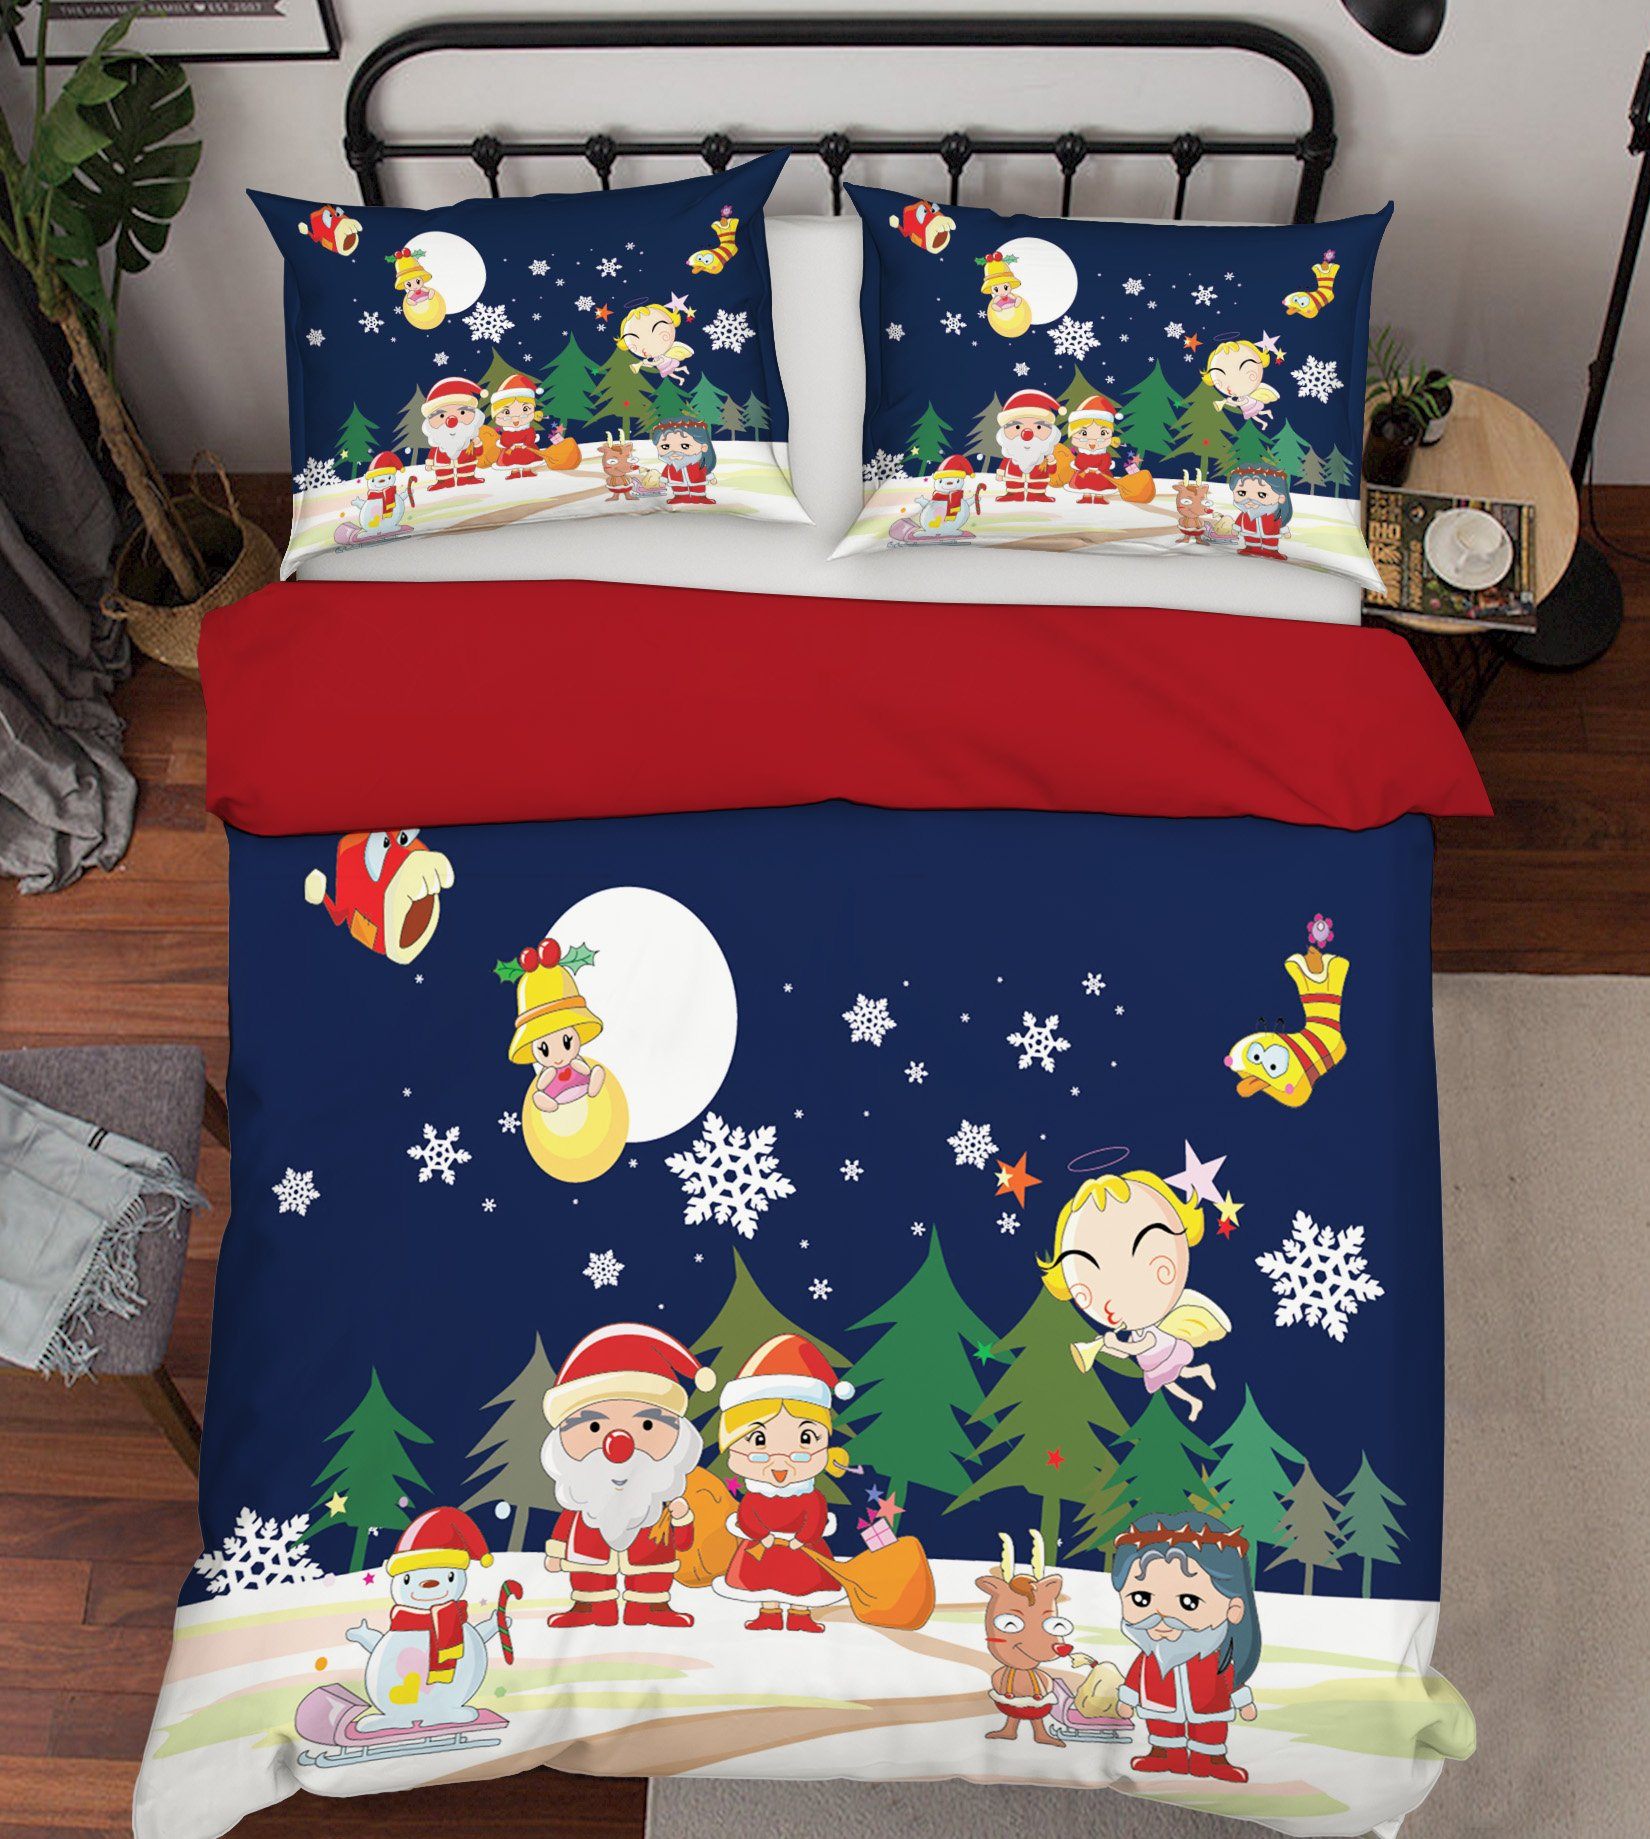 3D Christmas Moon Companionship 43 Bed Pillowcases Quilt Quiet Covers AJ Creativity Home 